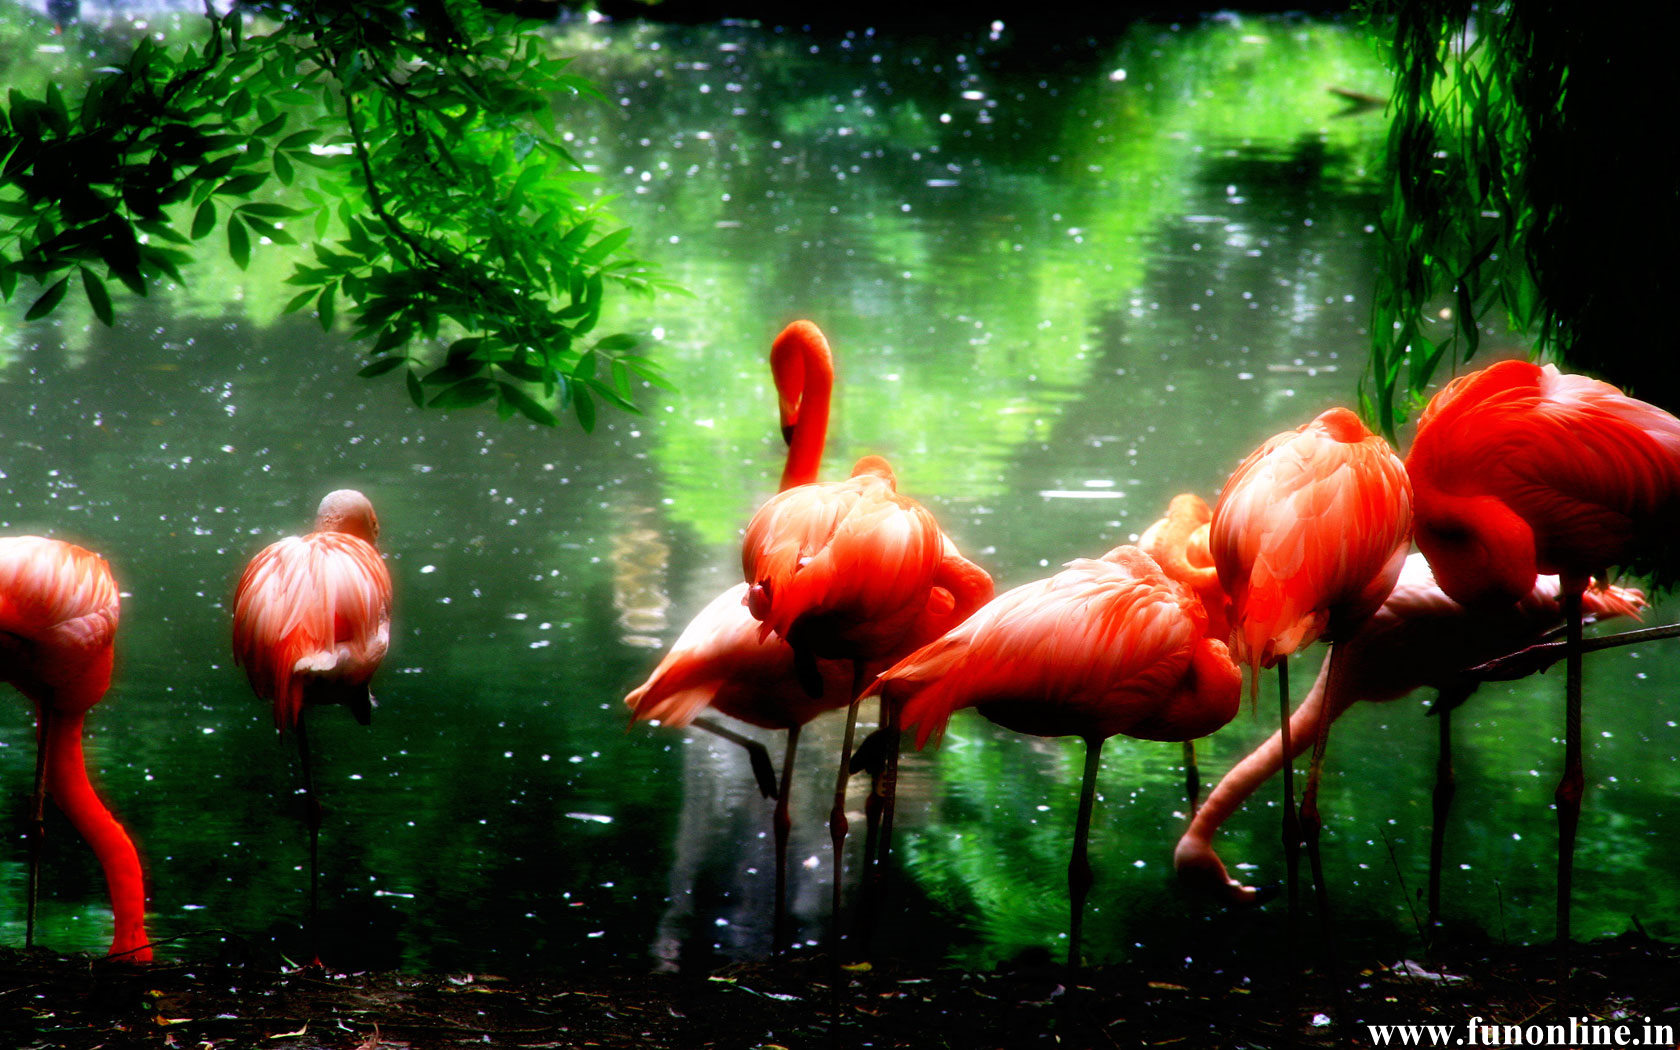 Flamingo Wallpaper Caribbean Flamingos HD